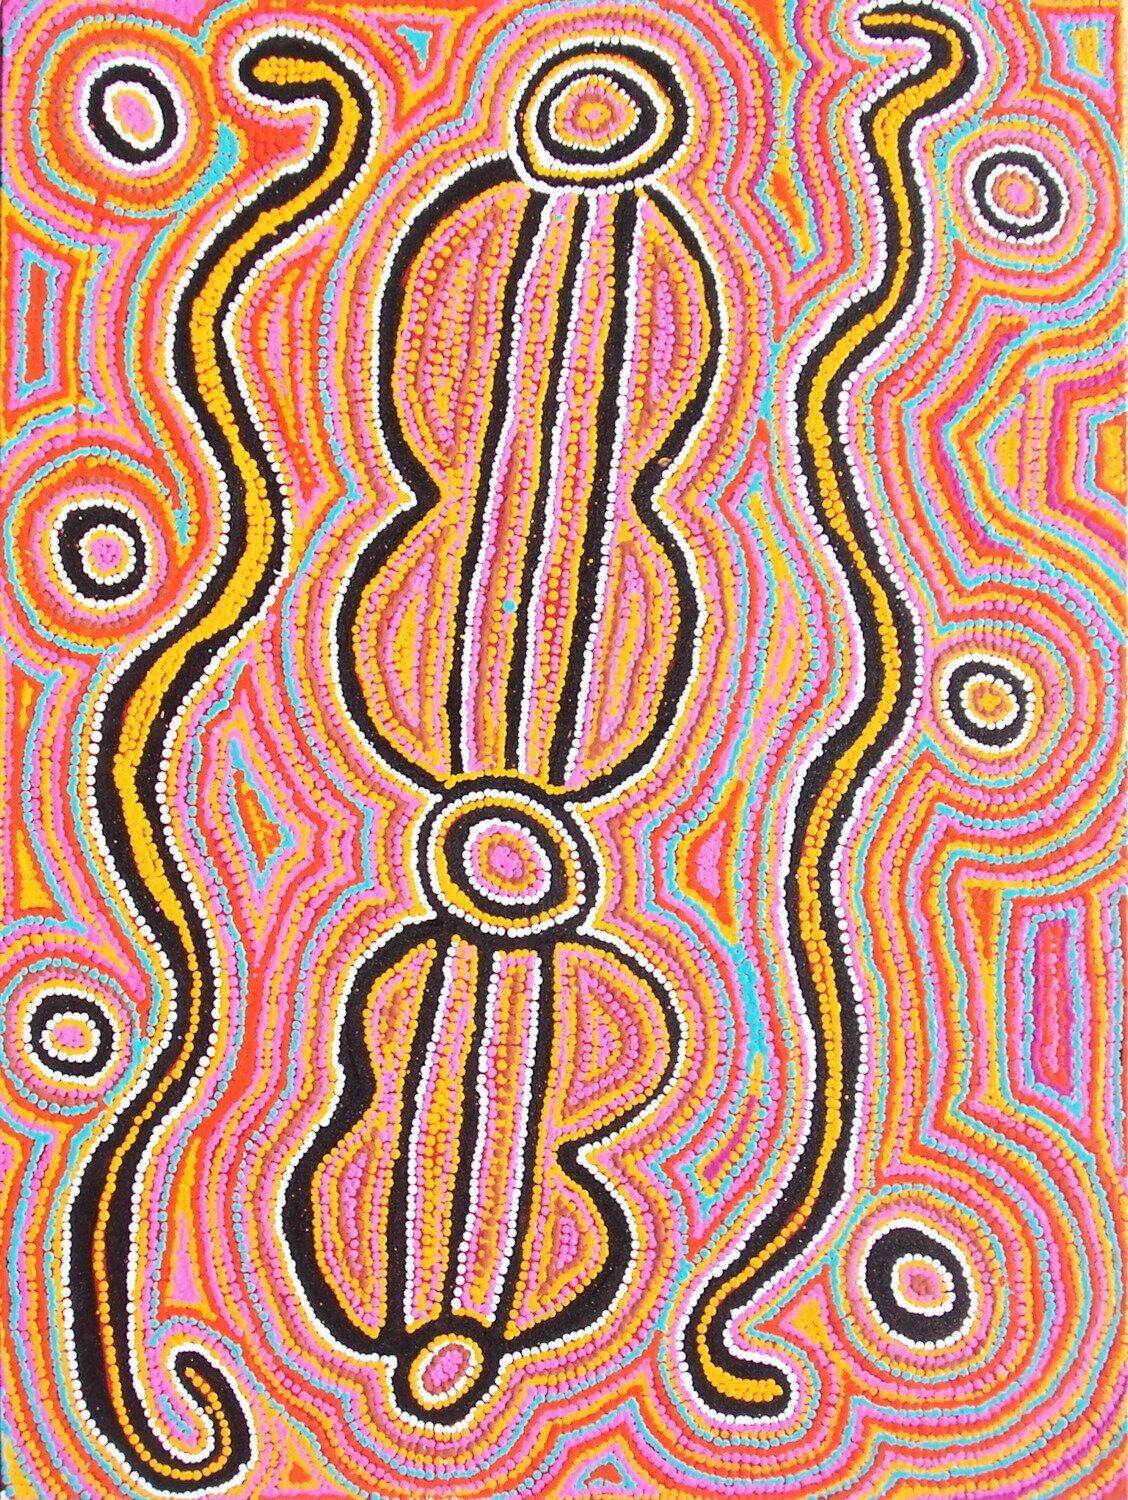 Water and Wanampi Snake Dreaming, 2007 by Jorna Nelson Napurrurla
122x91cm